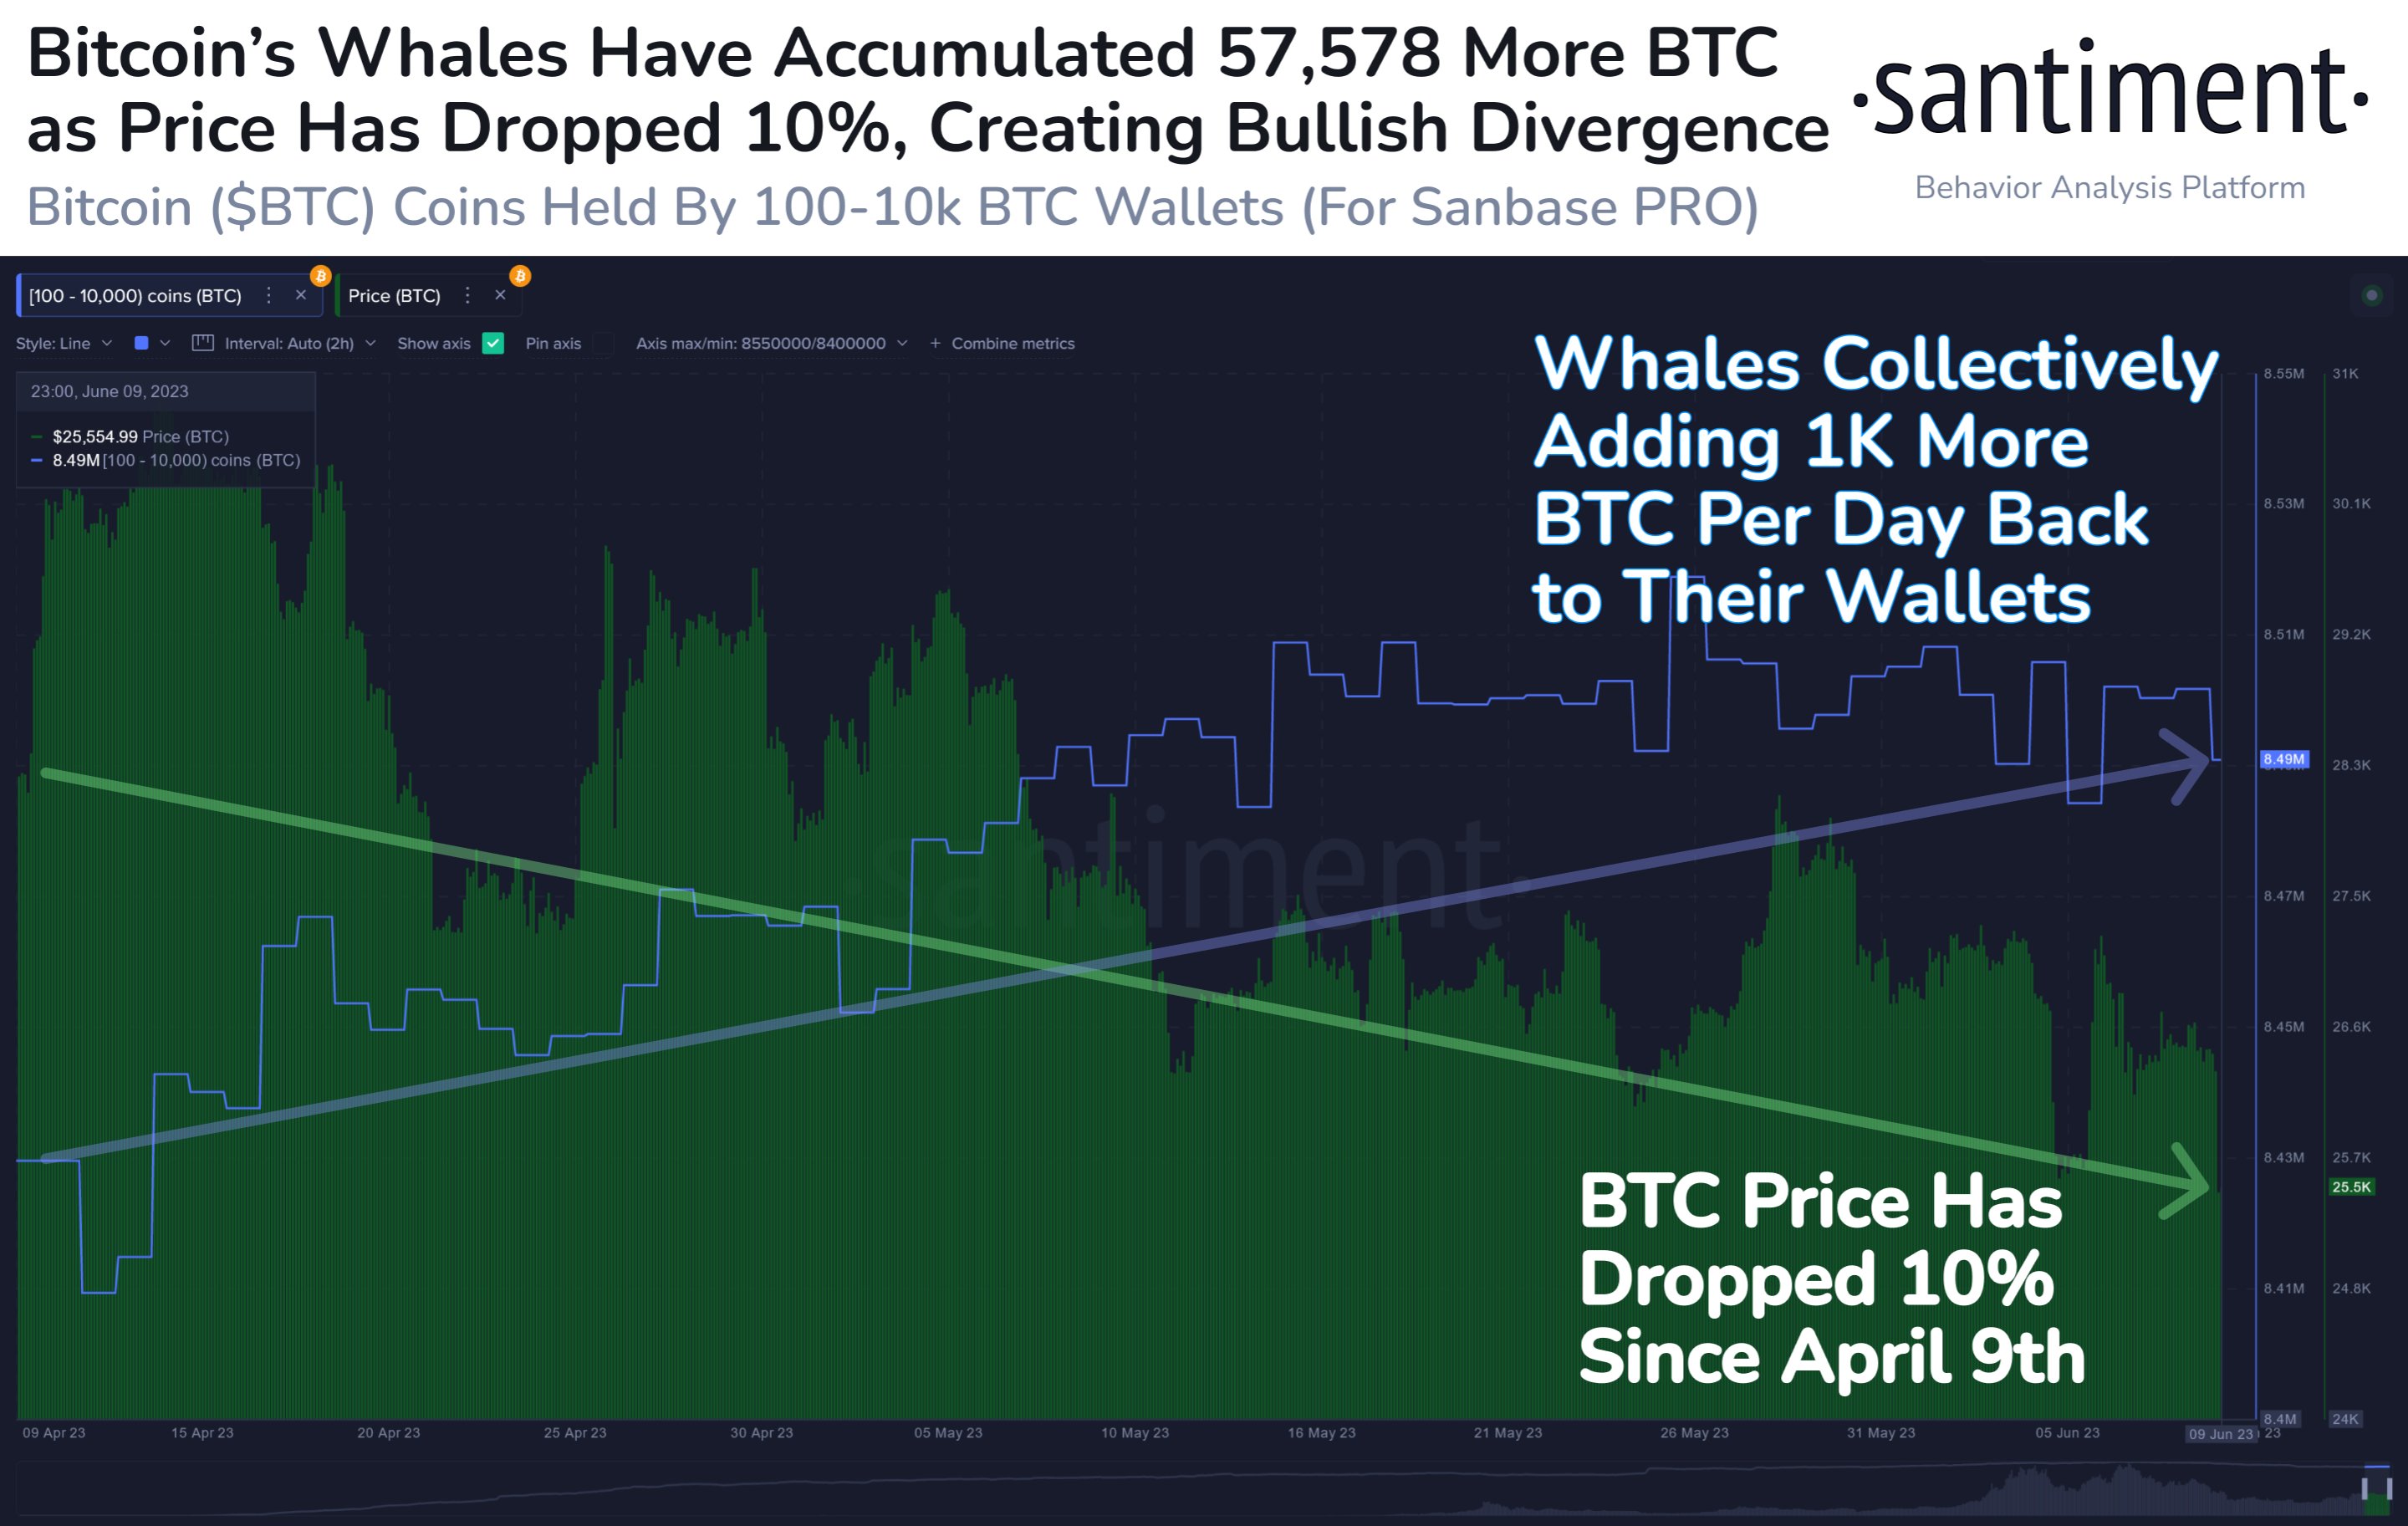 Bitcoin whale accumulation